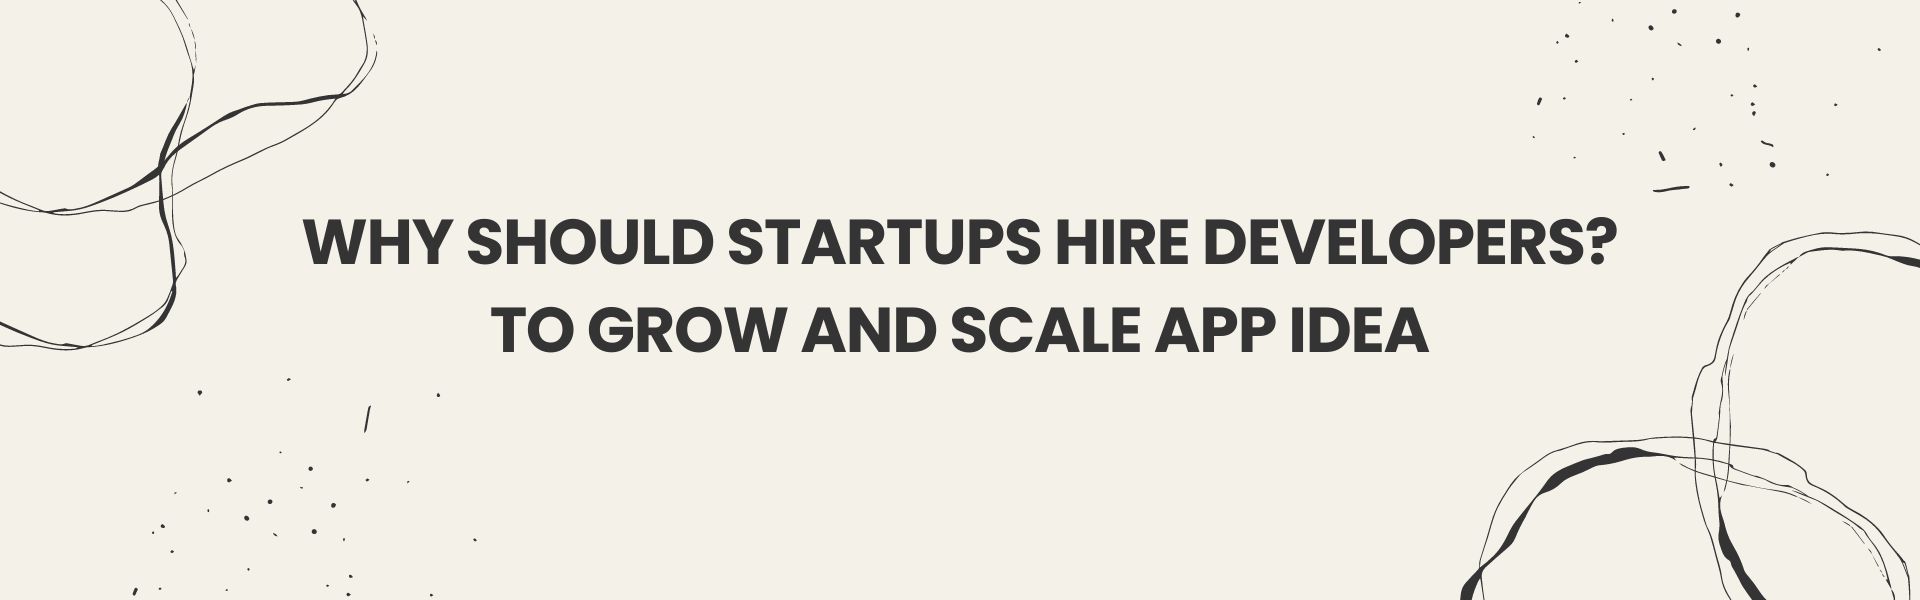 Startups Hire Developers